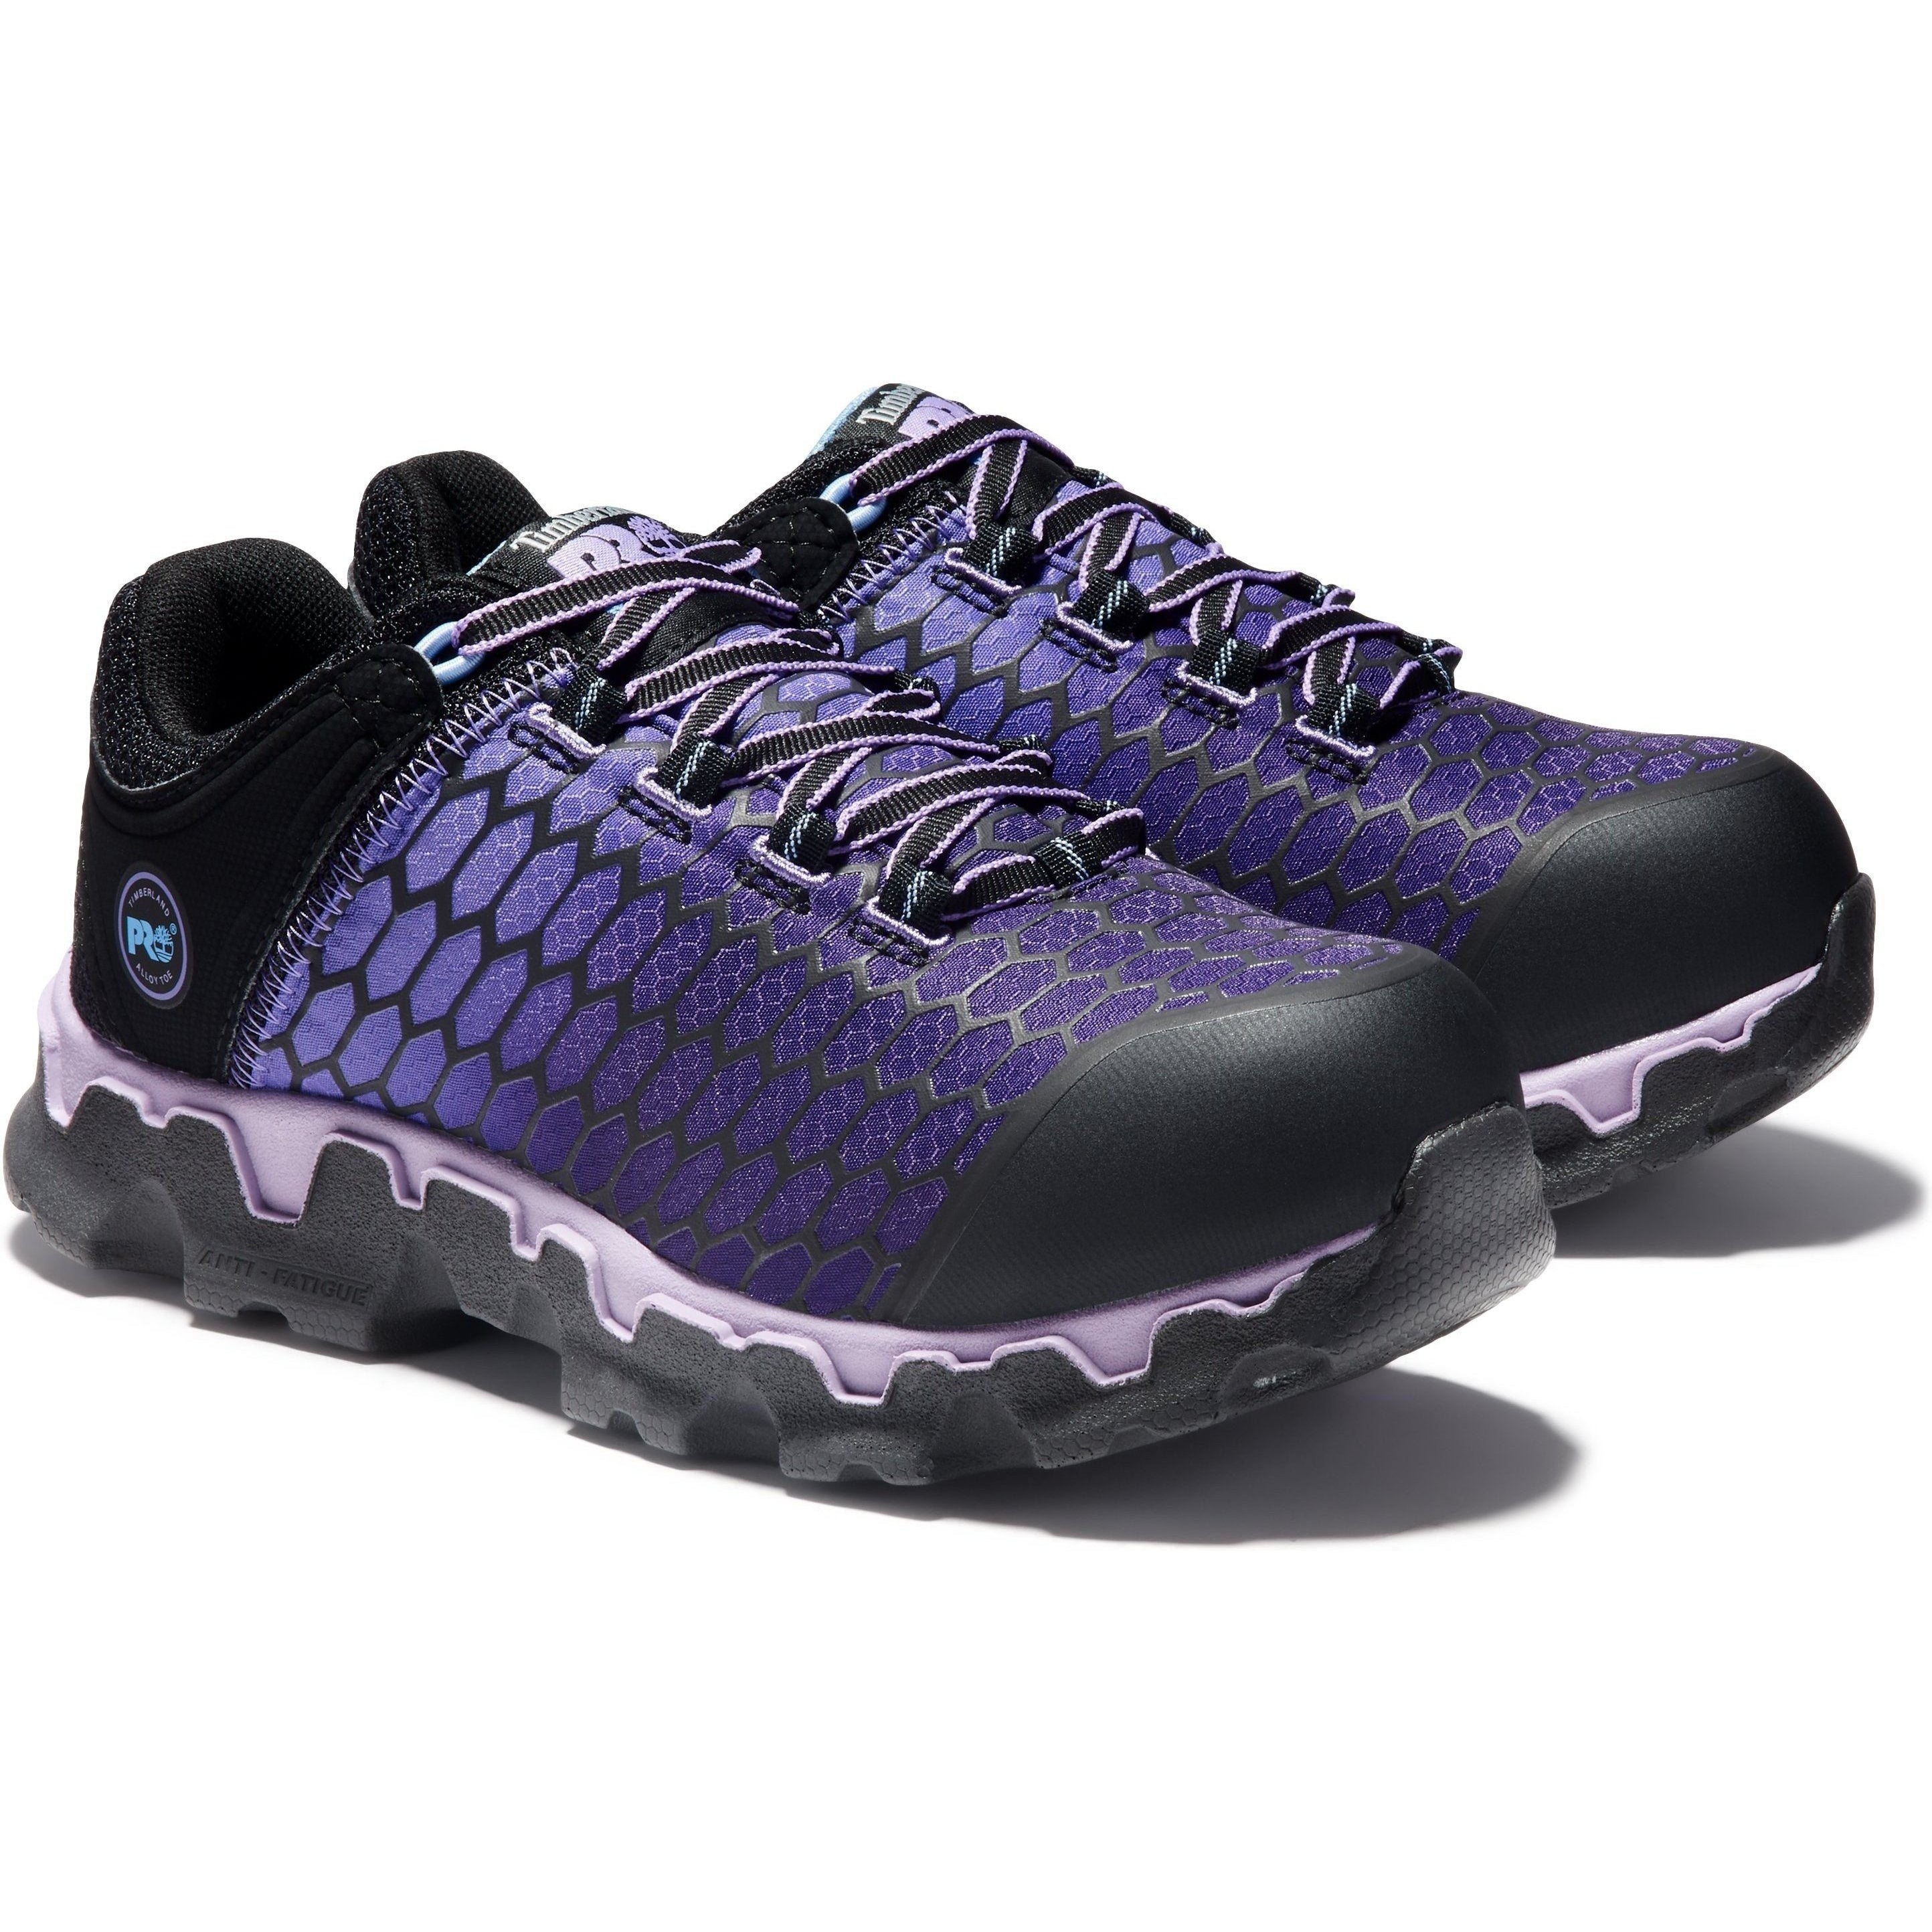 Timberland PRO Women's Powertrain Alloy Toe Work Shoe - TB1A1H1S001 5.5 / Medium / Black/Purple - Overlook Boots